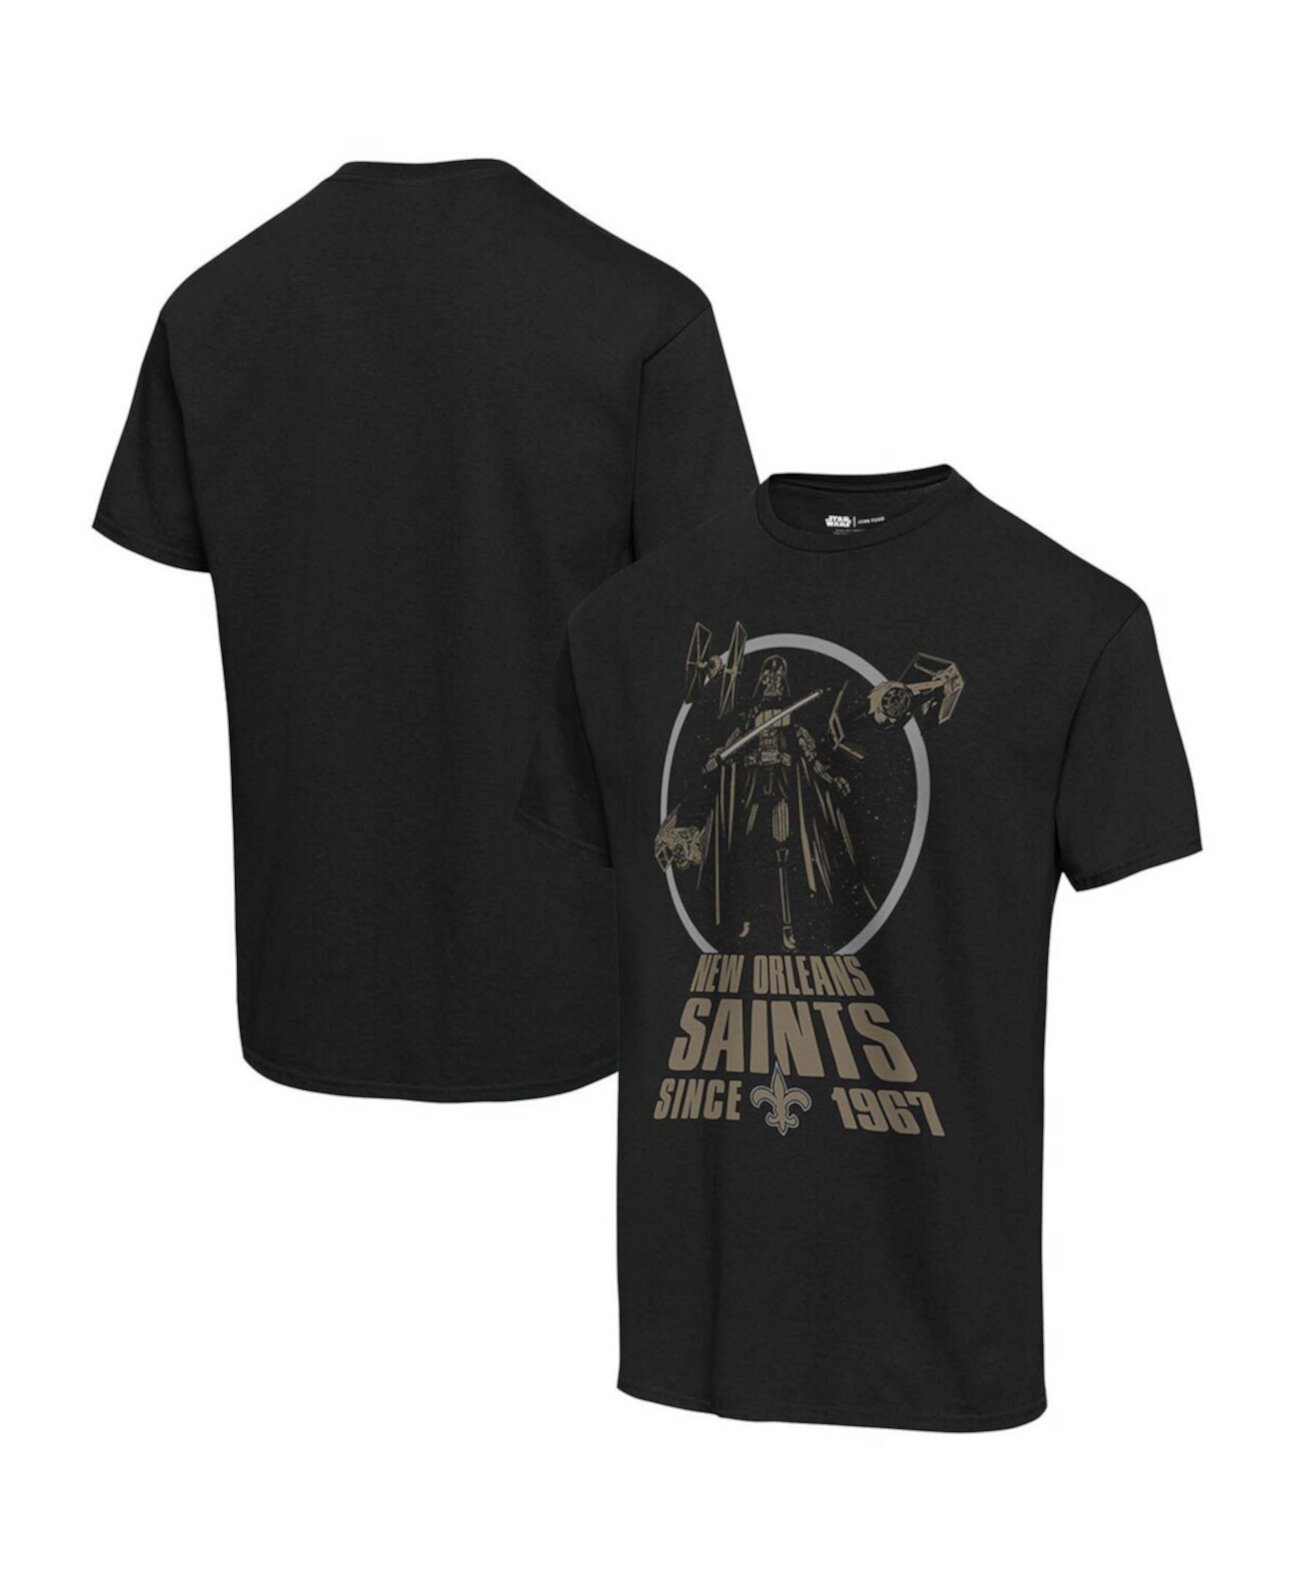 Мужская черная футболка с принтом New Orleans Saints Disney Star Wars Empire Title Crawl Junk Food